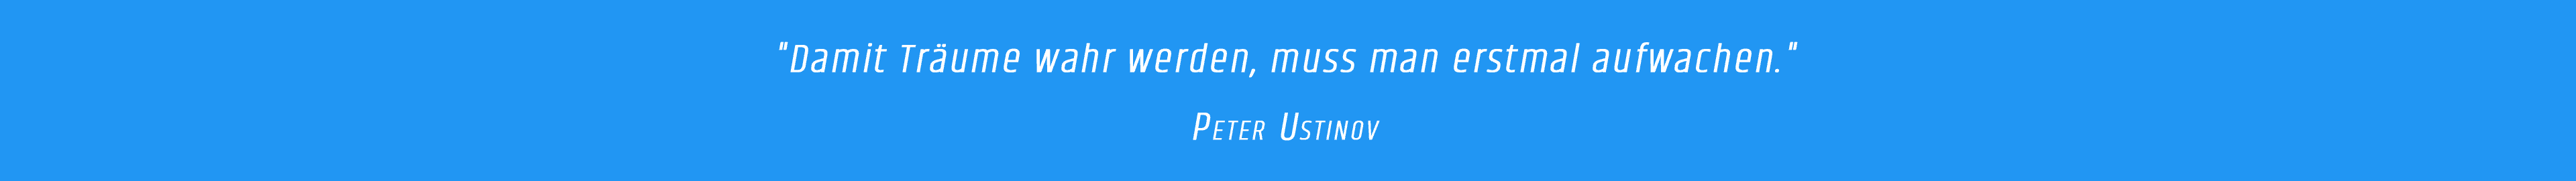 Zitat - Peter Ustinov